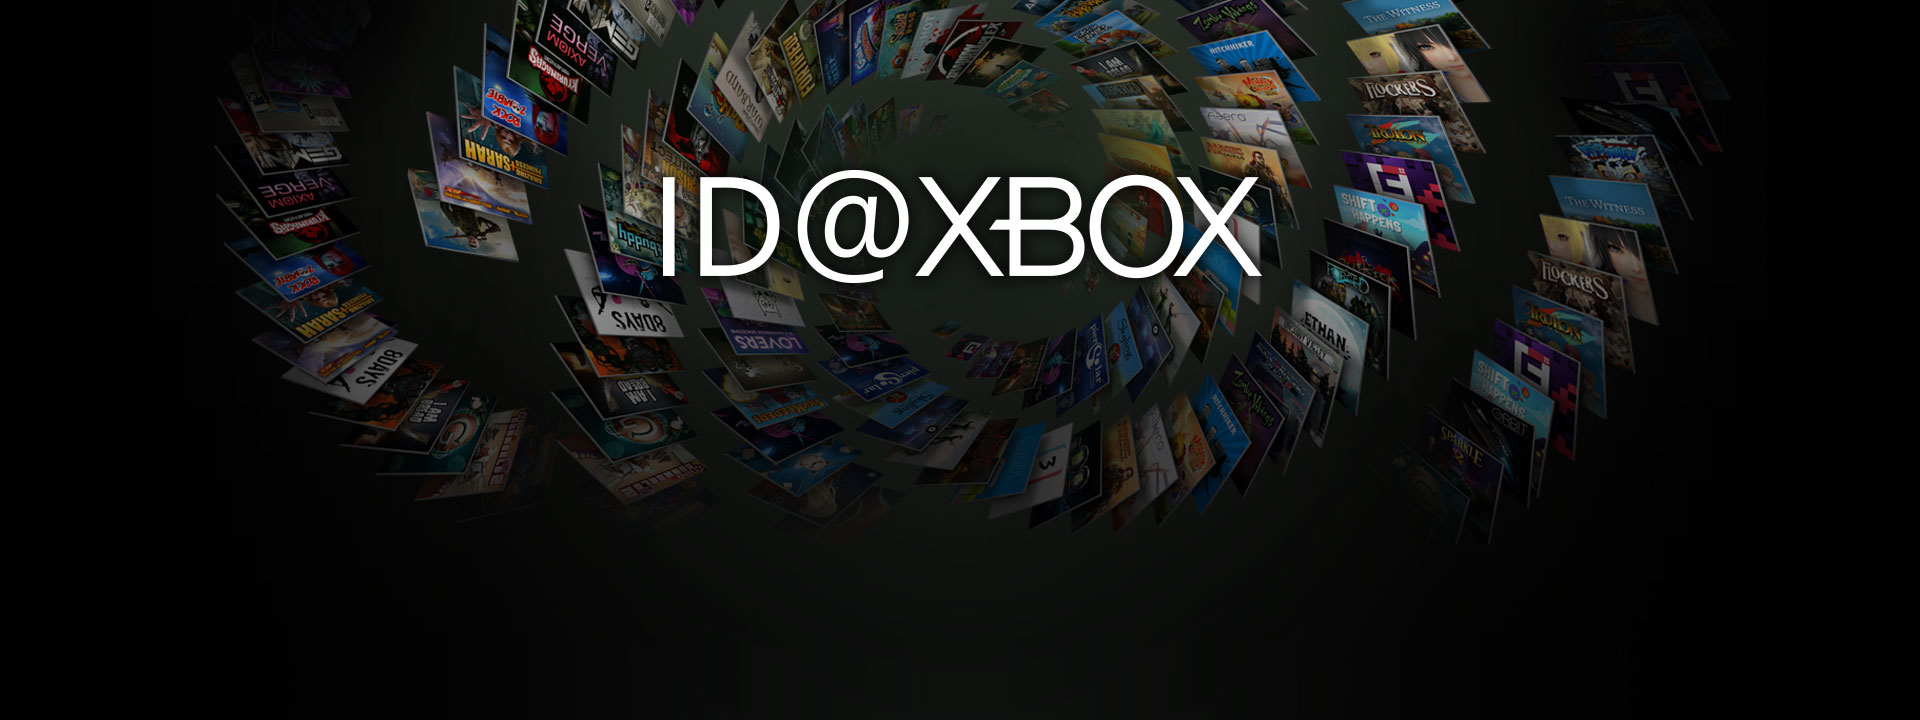 ID at Xbox 標誌在 ID 遊戲的外包裝圖收藏前方